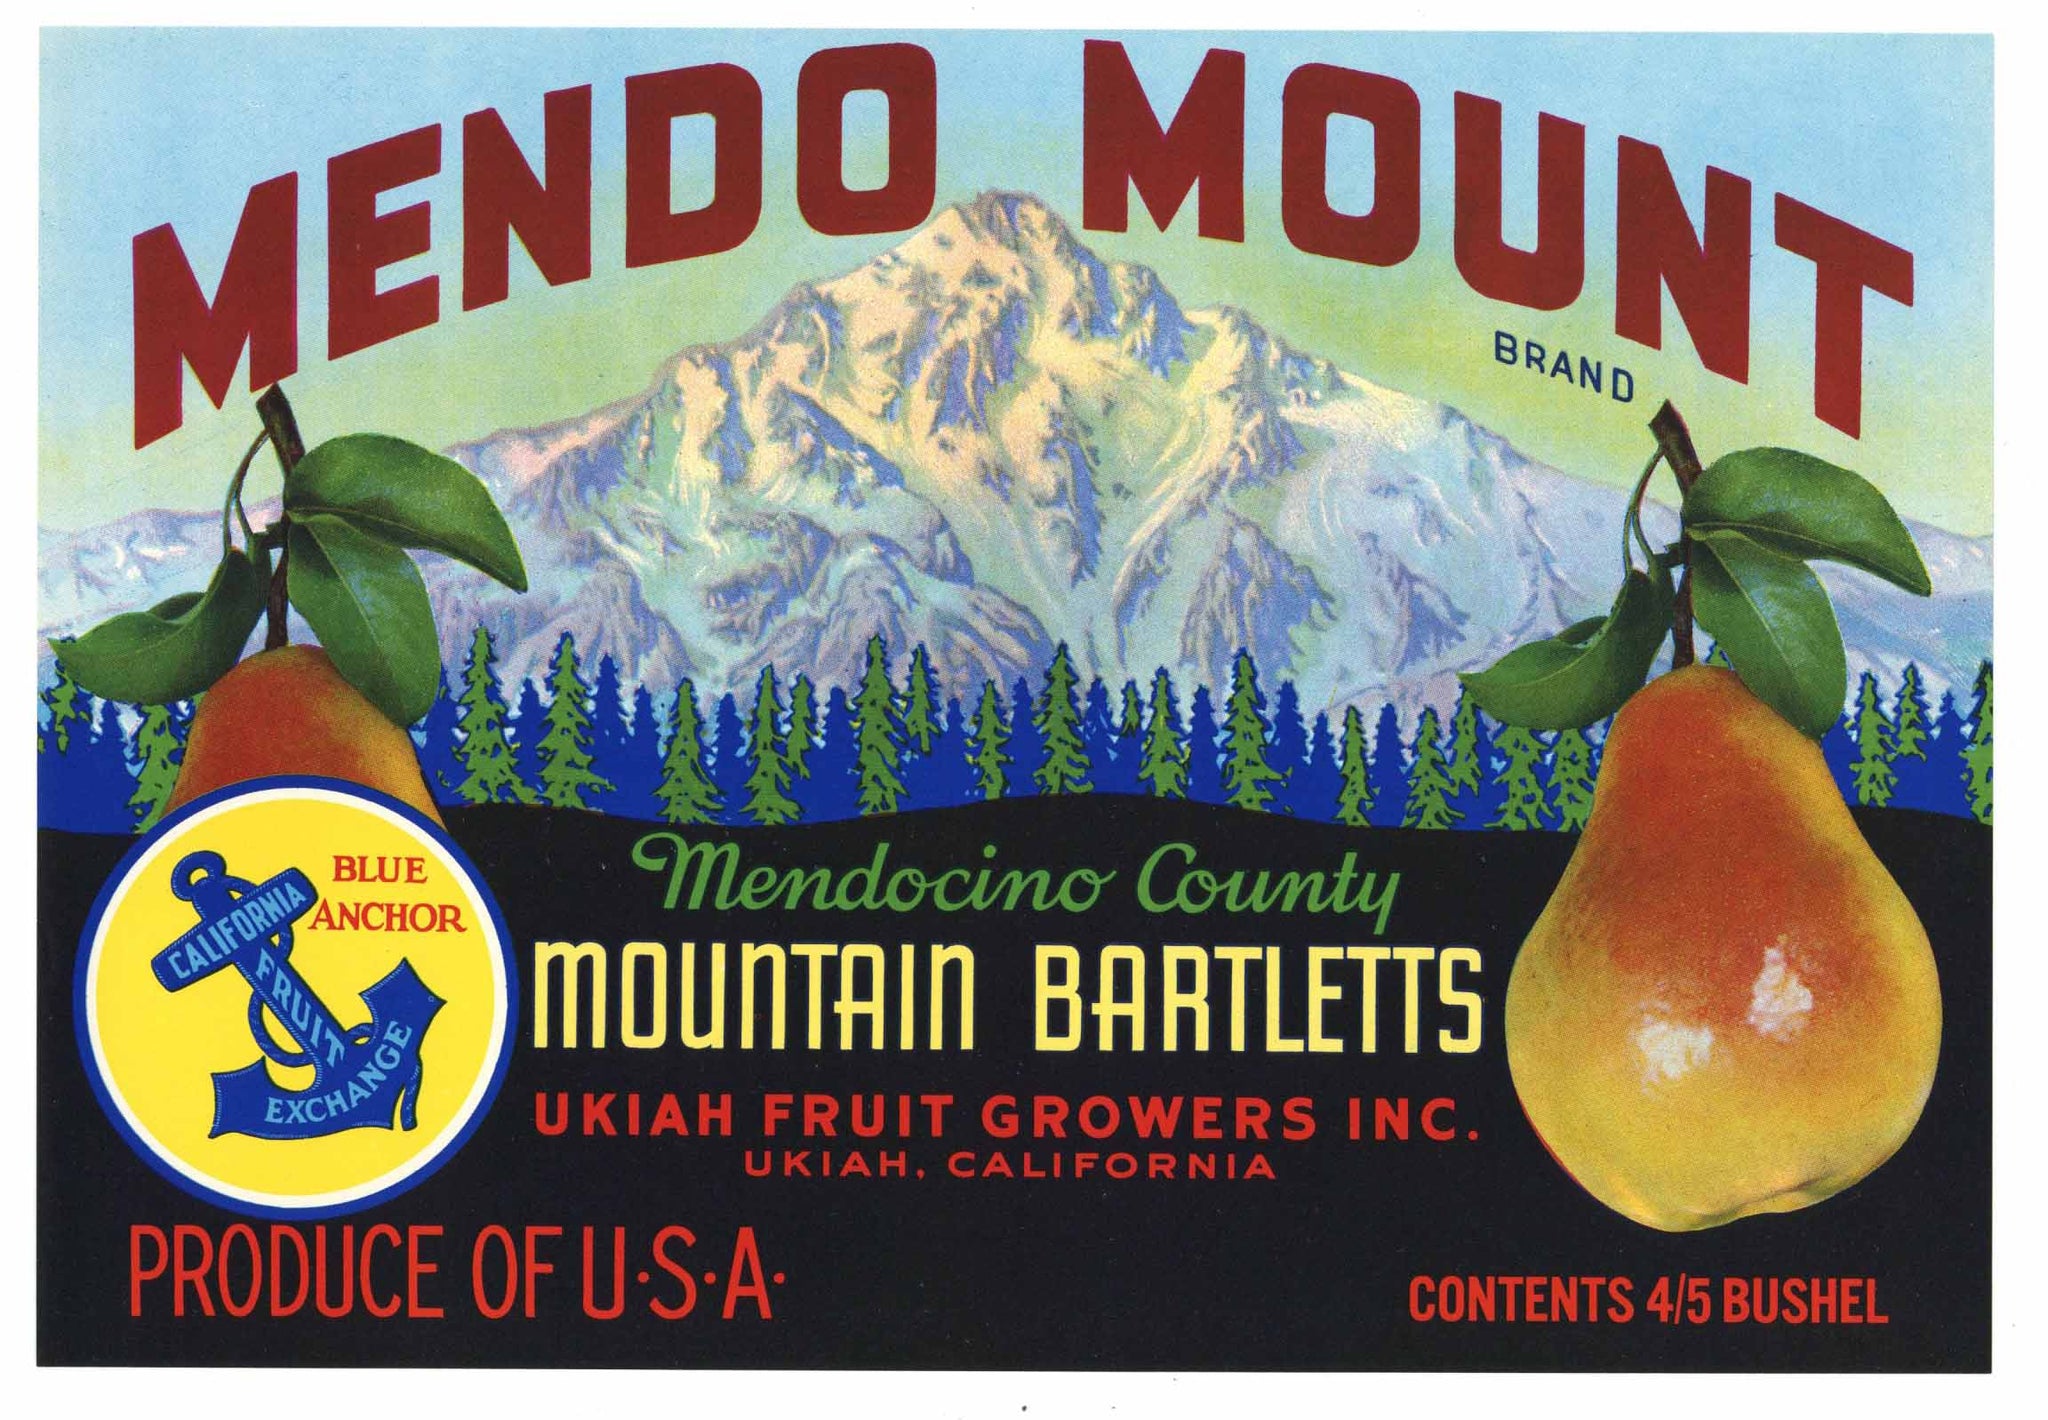 Mendo Mount Brand Vintage Ukiah California Pear Crate Label, blue anchor